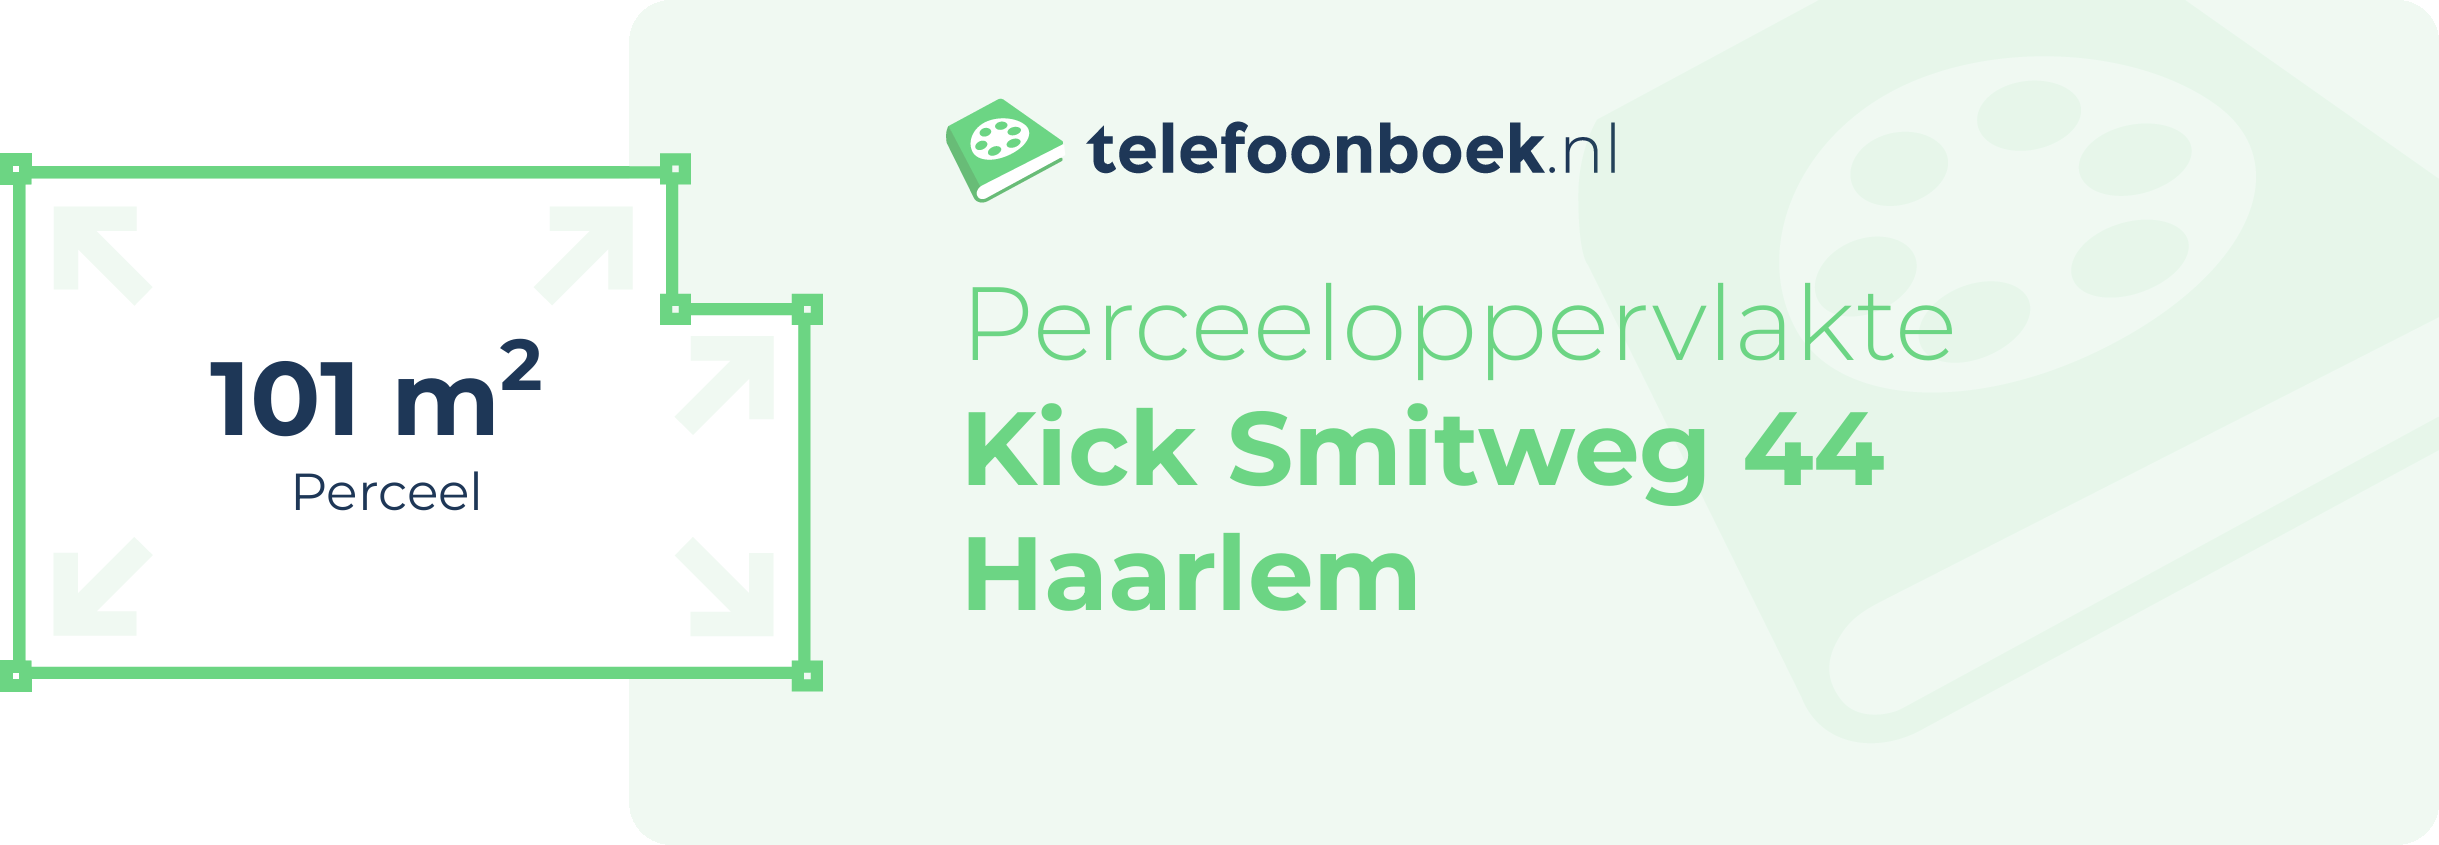 Perceeloppervlakte Kick Smitweg 44 Haarlem